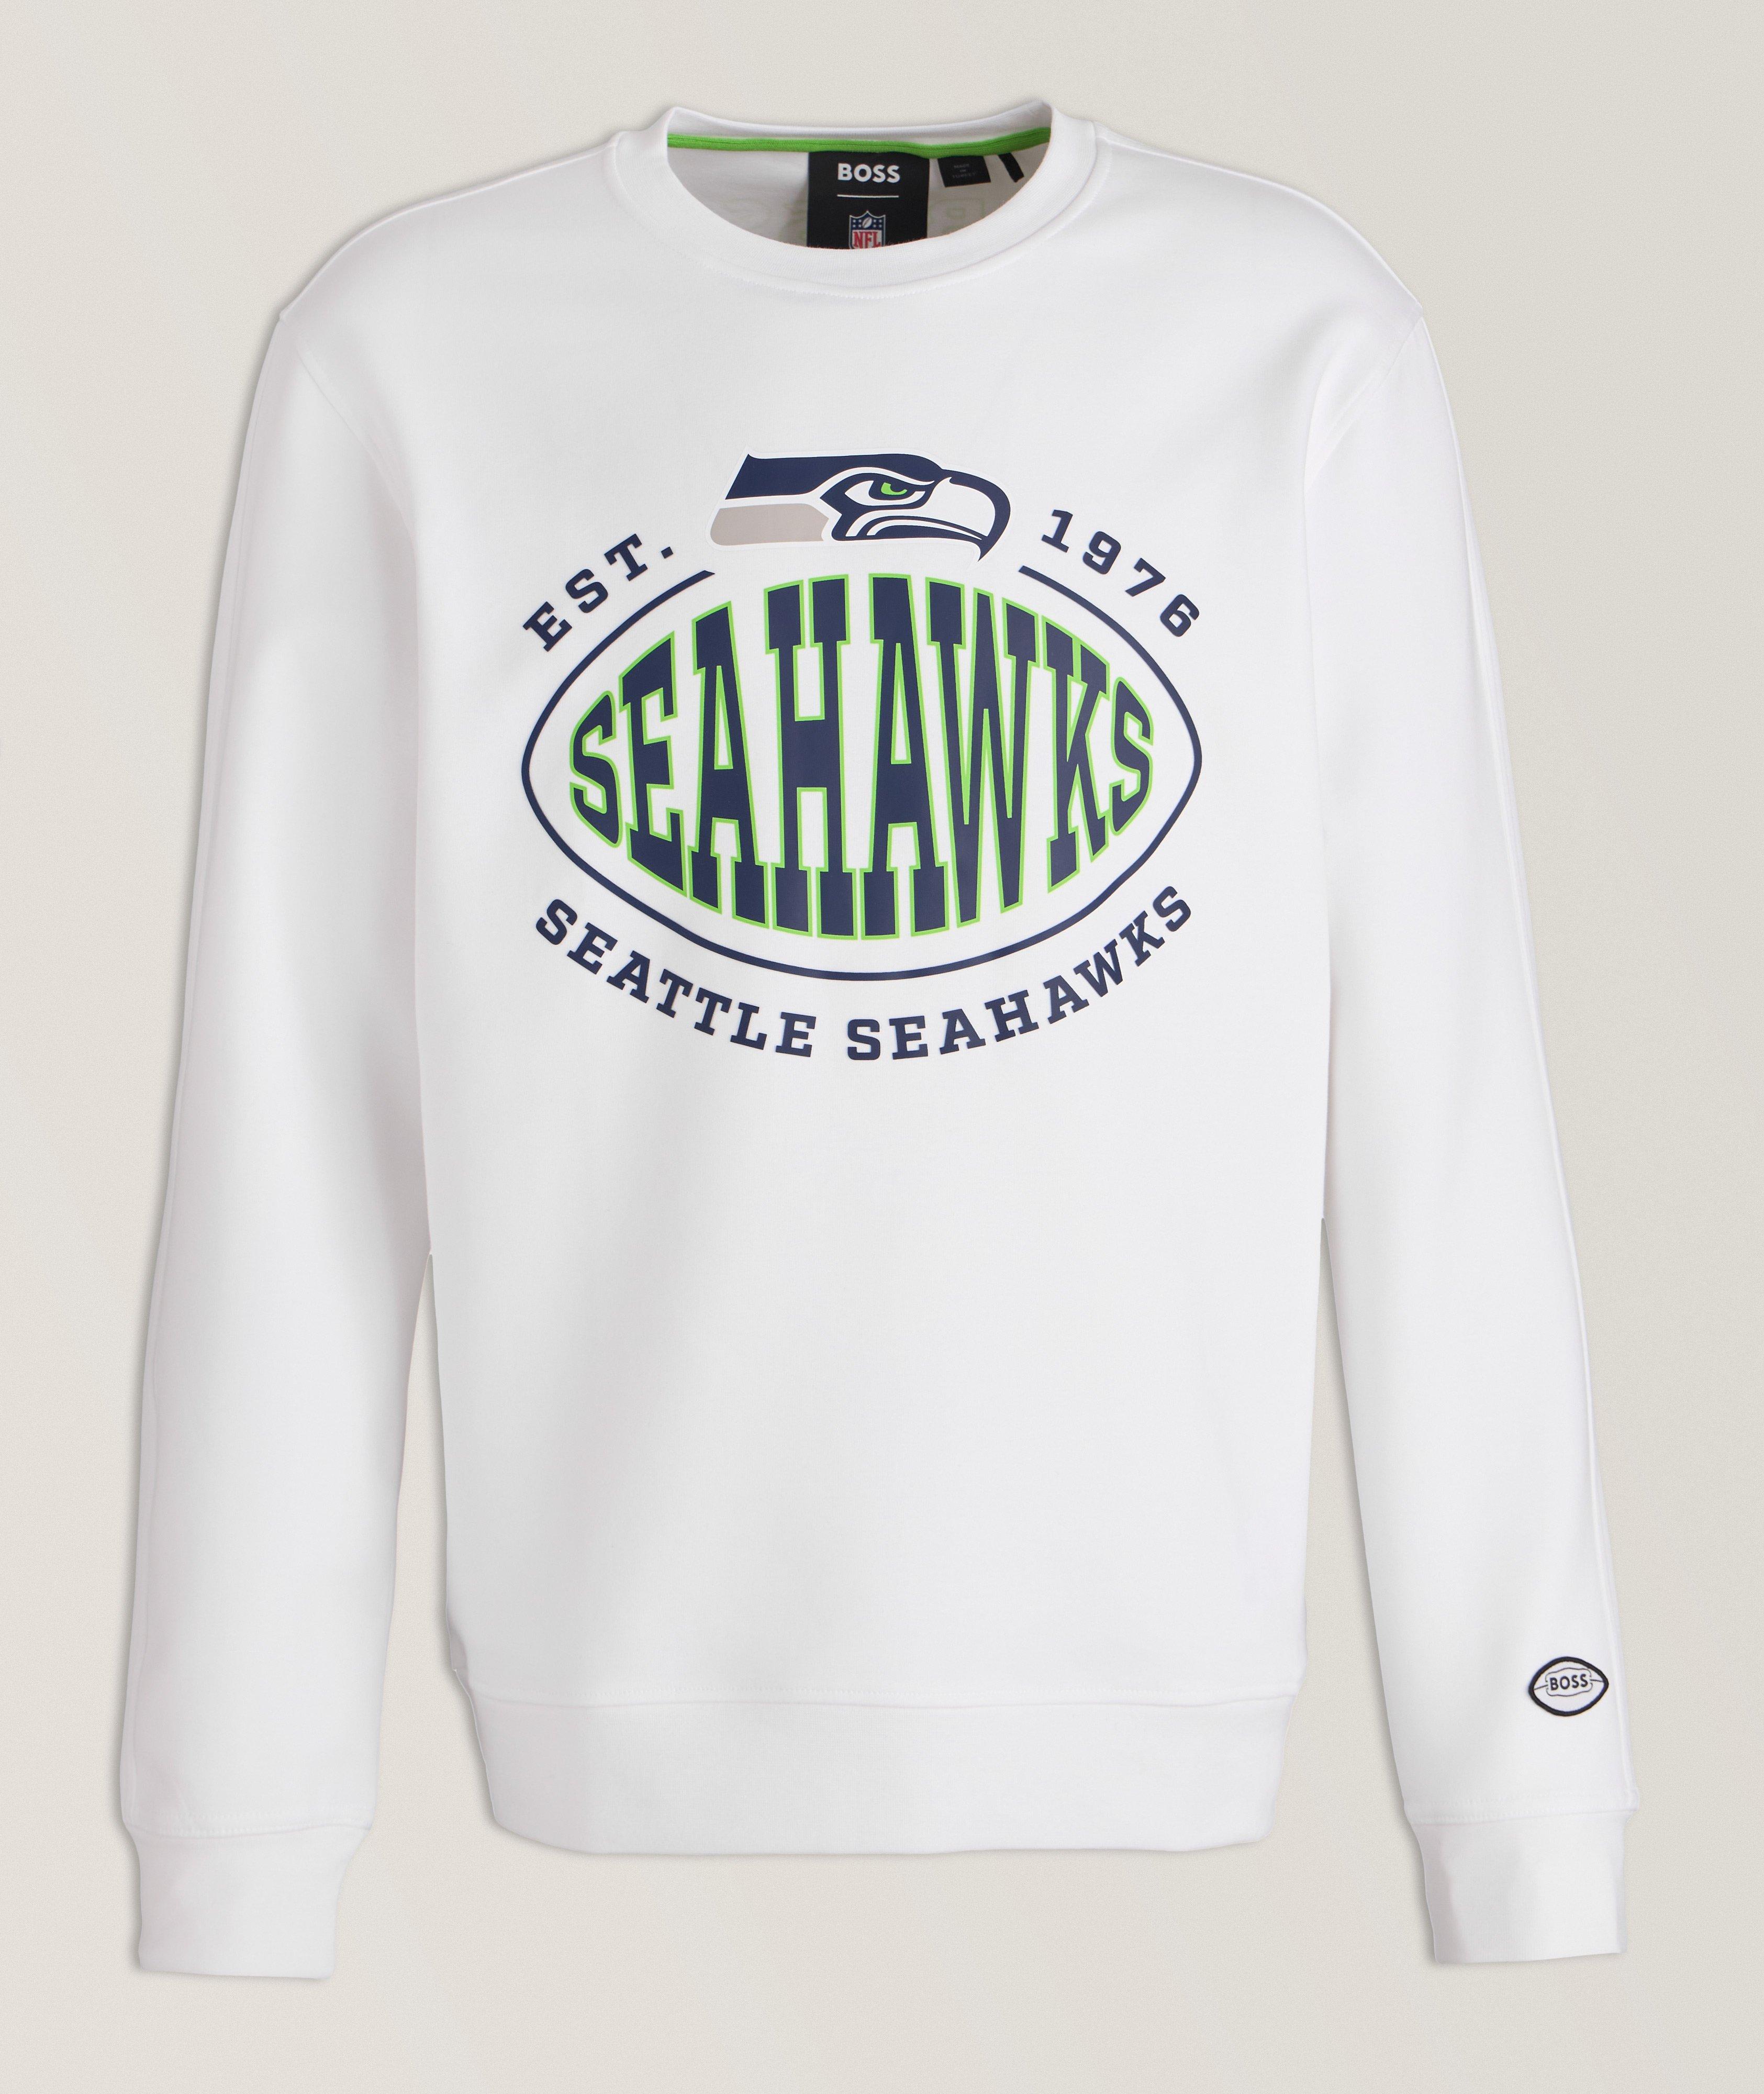 NFL Collection Seattle Seahawks Sweatshirt image 0